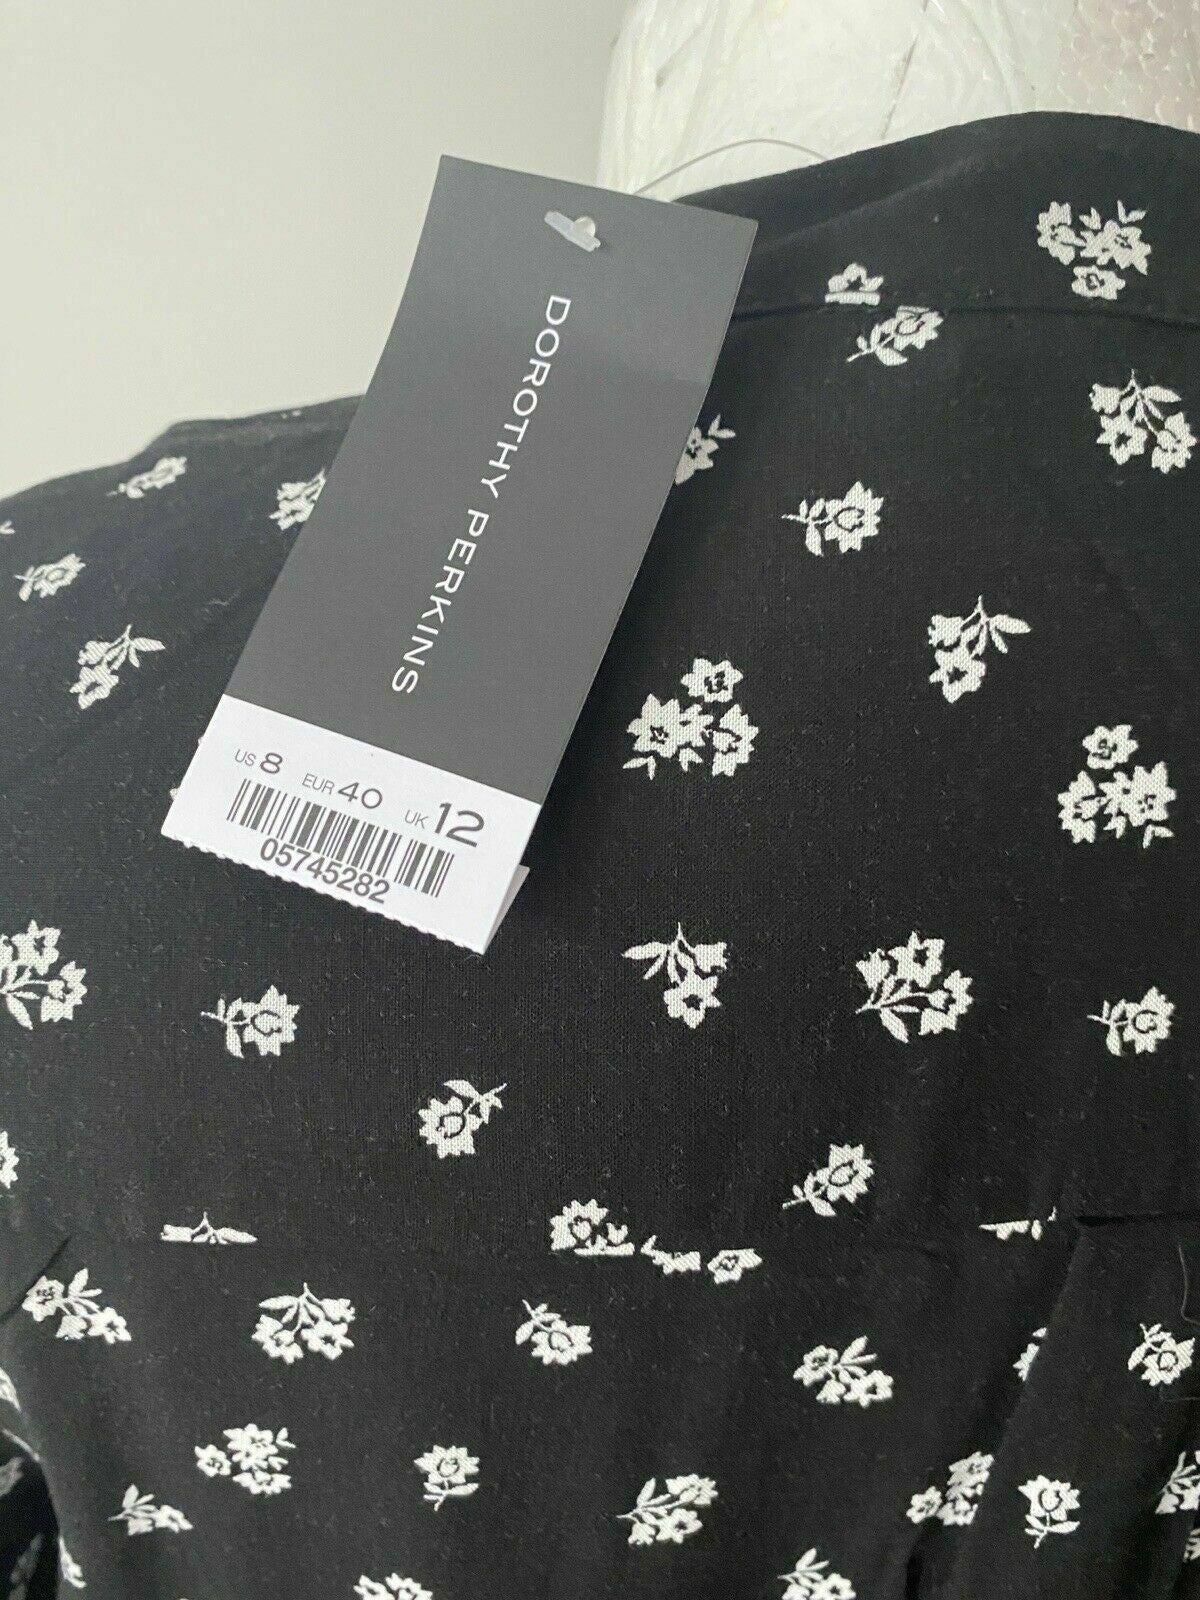 Dorothy Perkins Black White Floral Shirt Size 12 Collarless